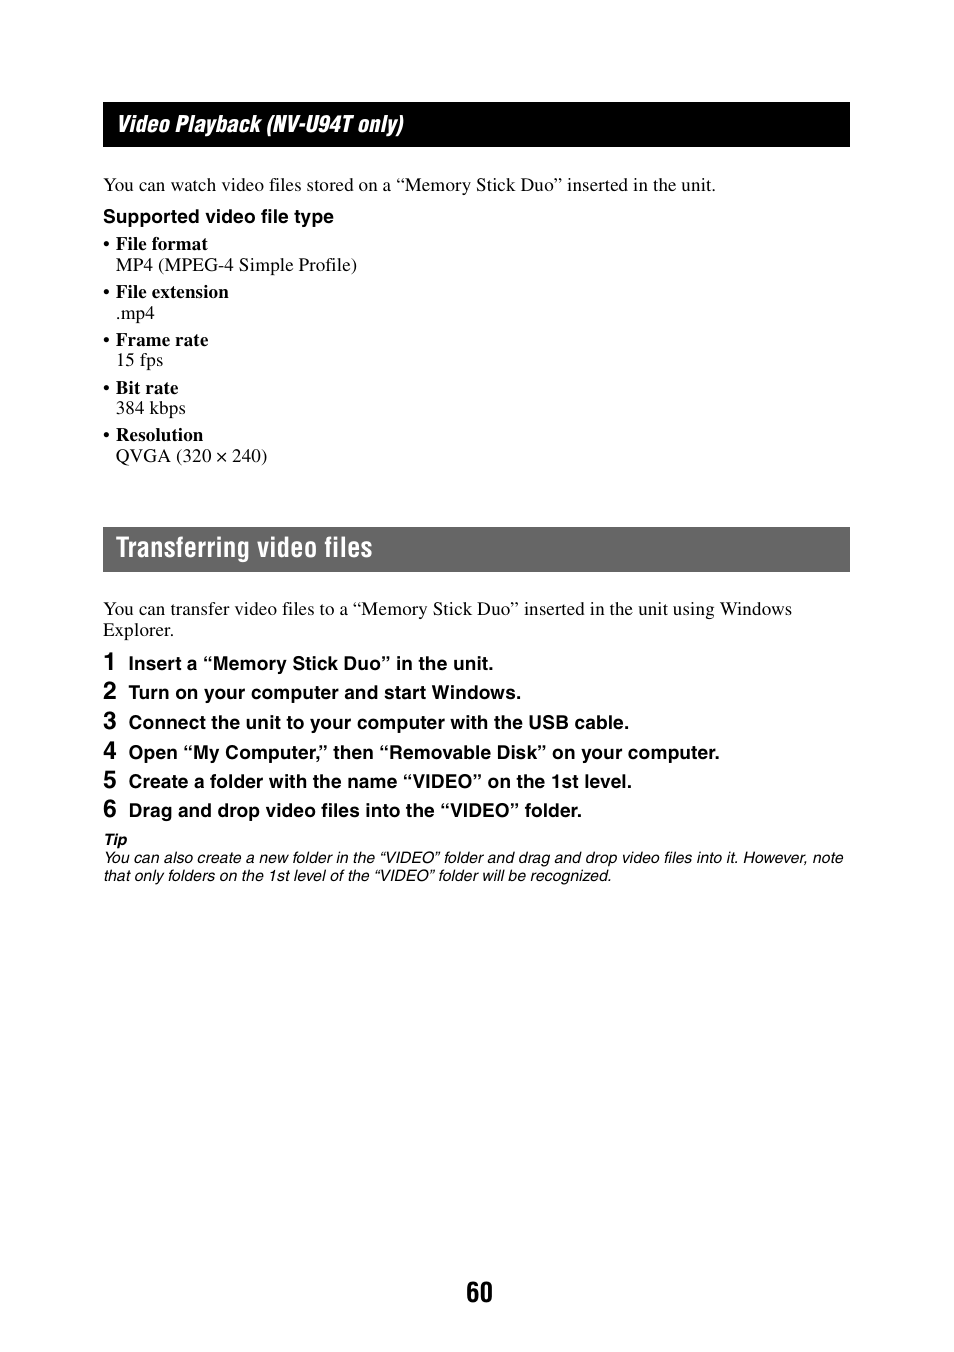 Video playback (nv-u94t only), Transferring video files | Sony NAV-U NV-U84 User Manual | Page 60 / 85